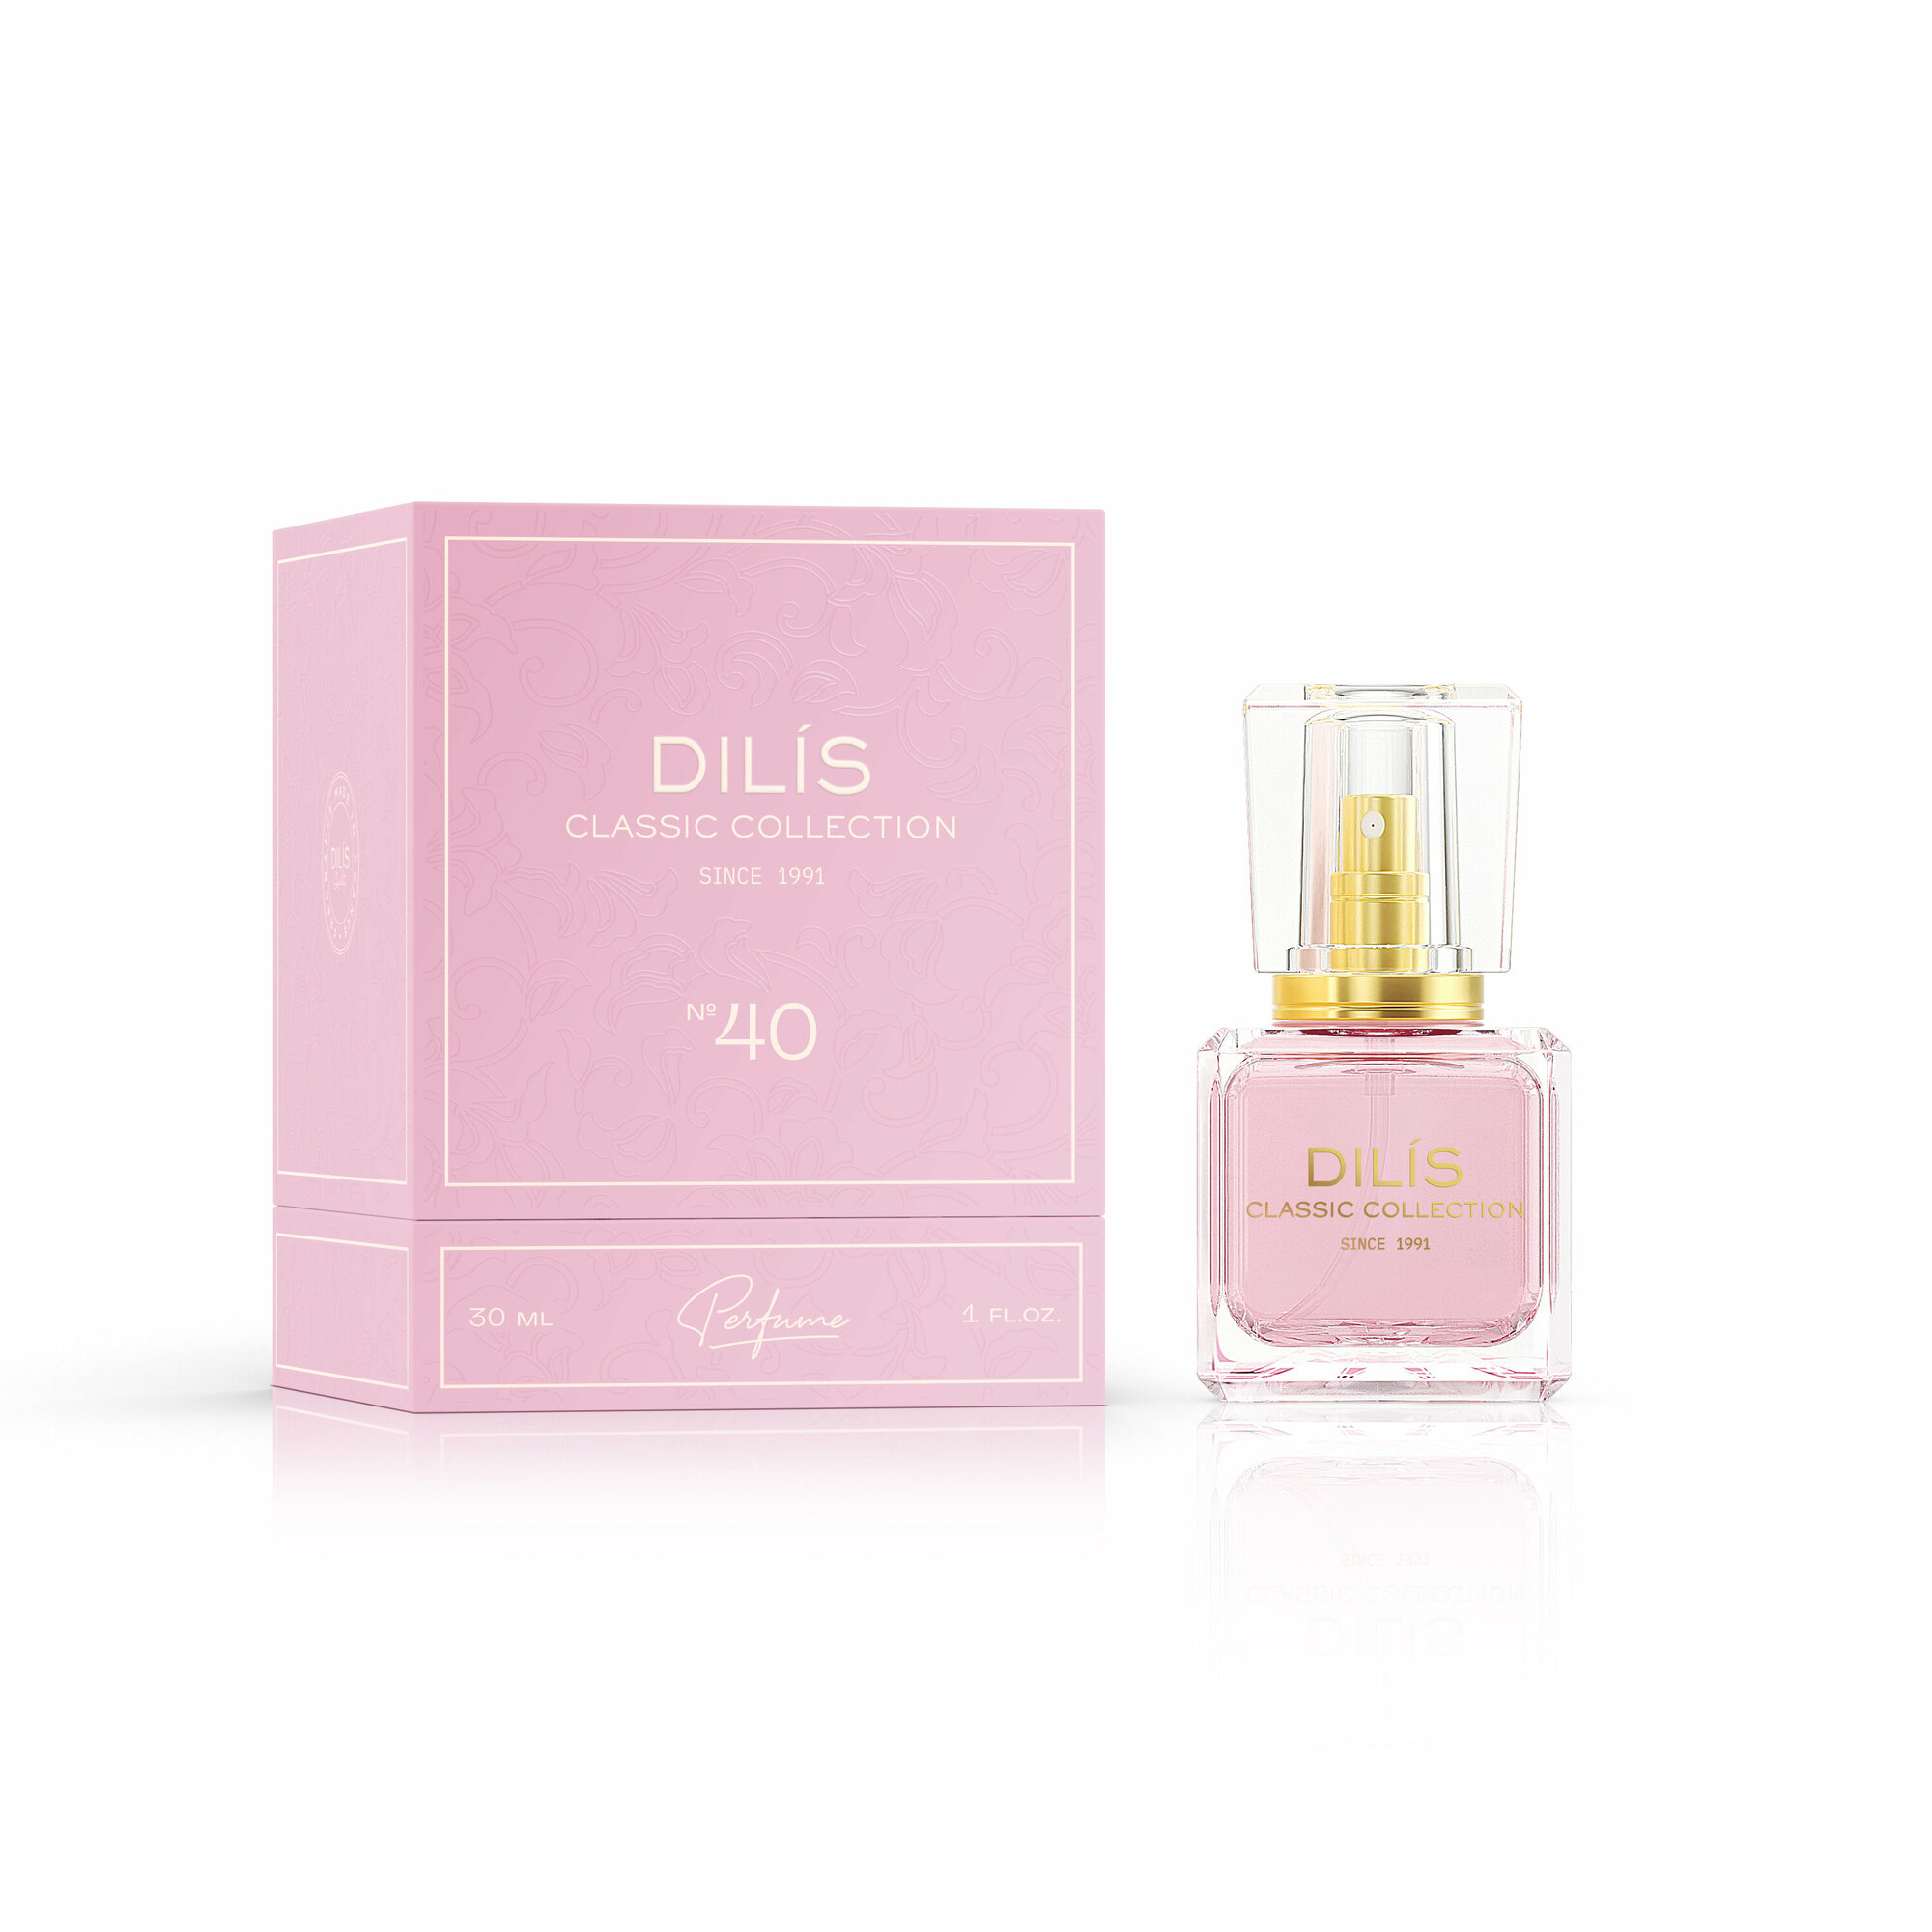 Dilis Parfum духи Classic Collection №40, 30 мл